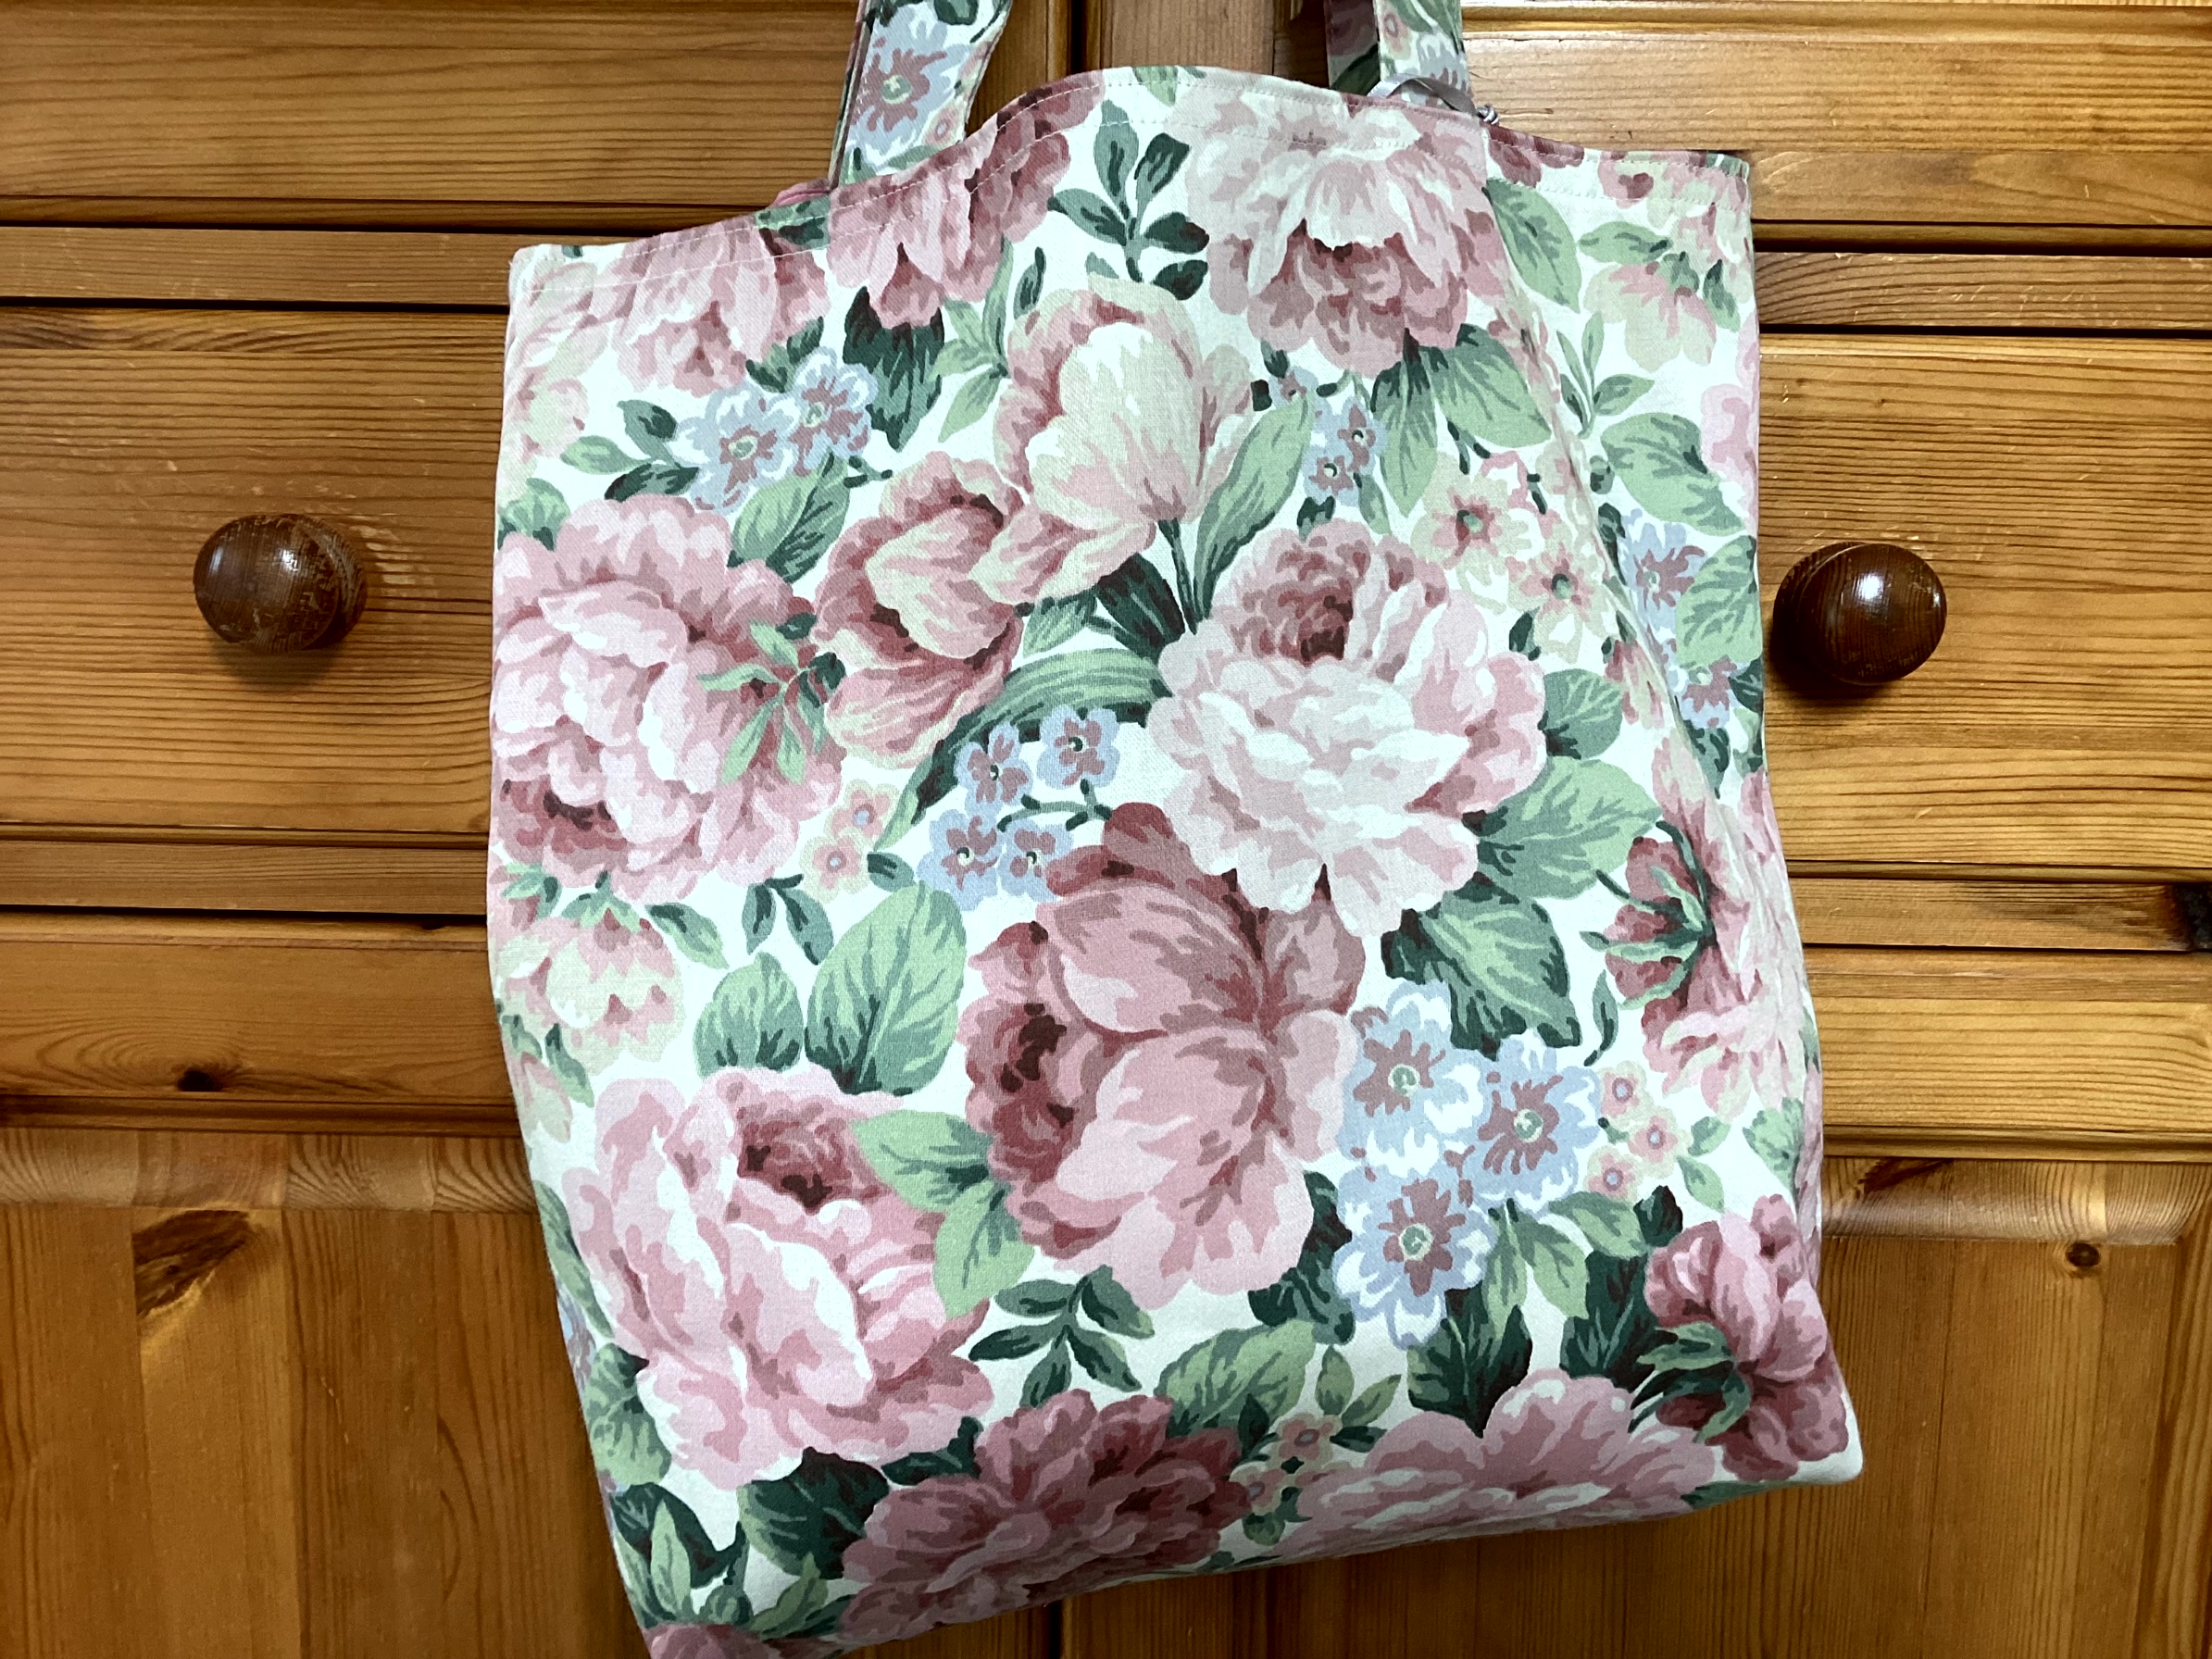 Tote Bag - large pink flowers